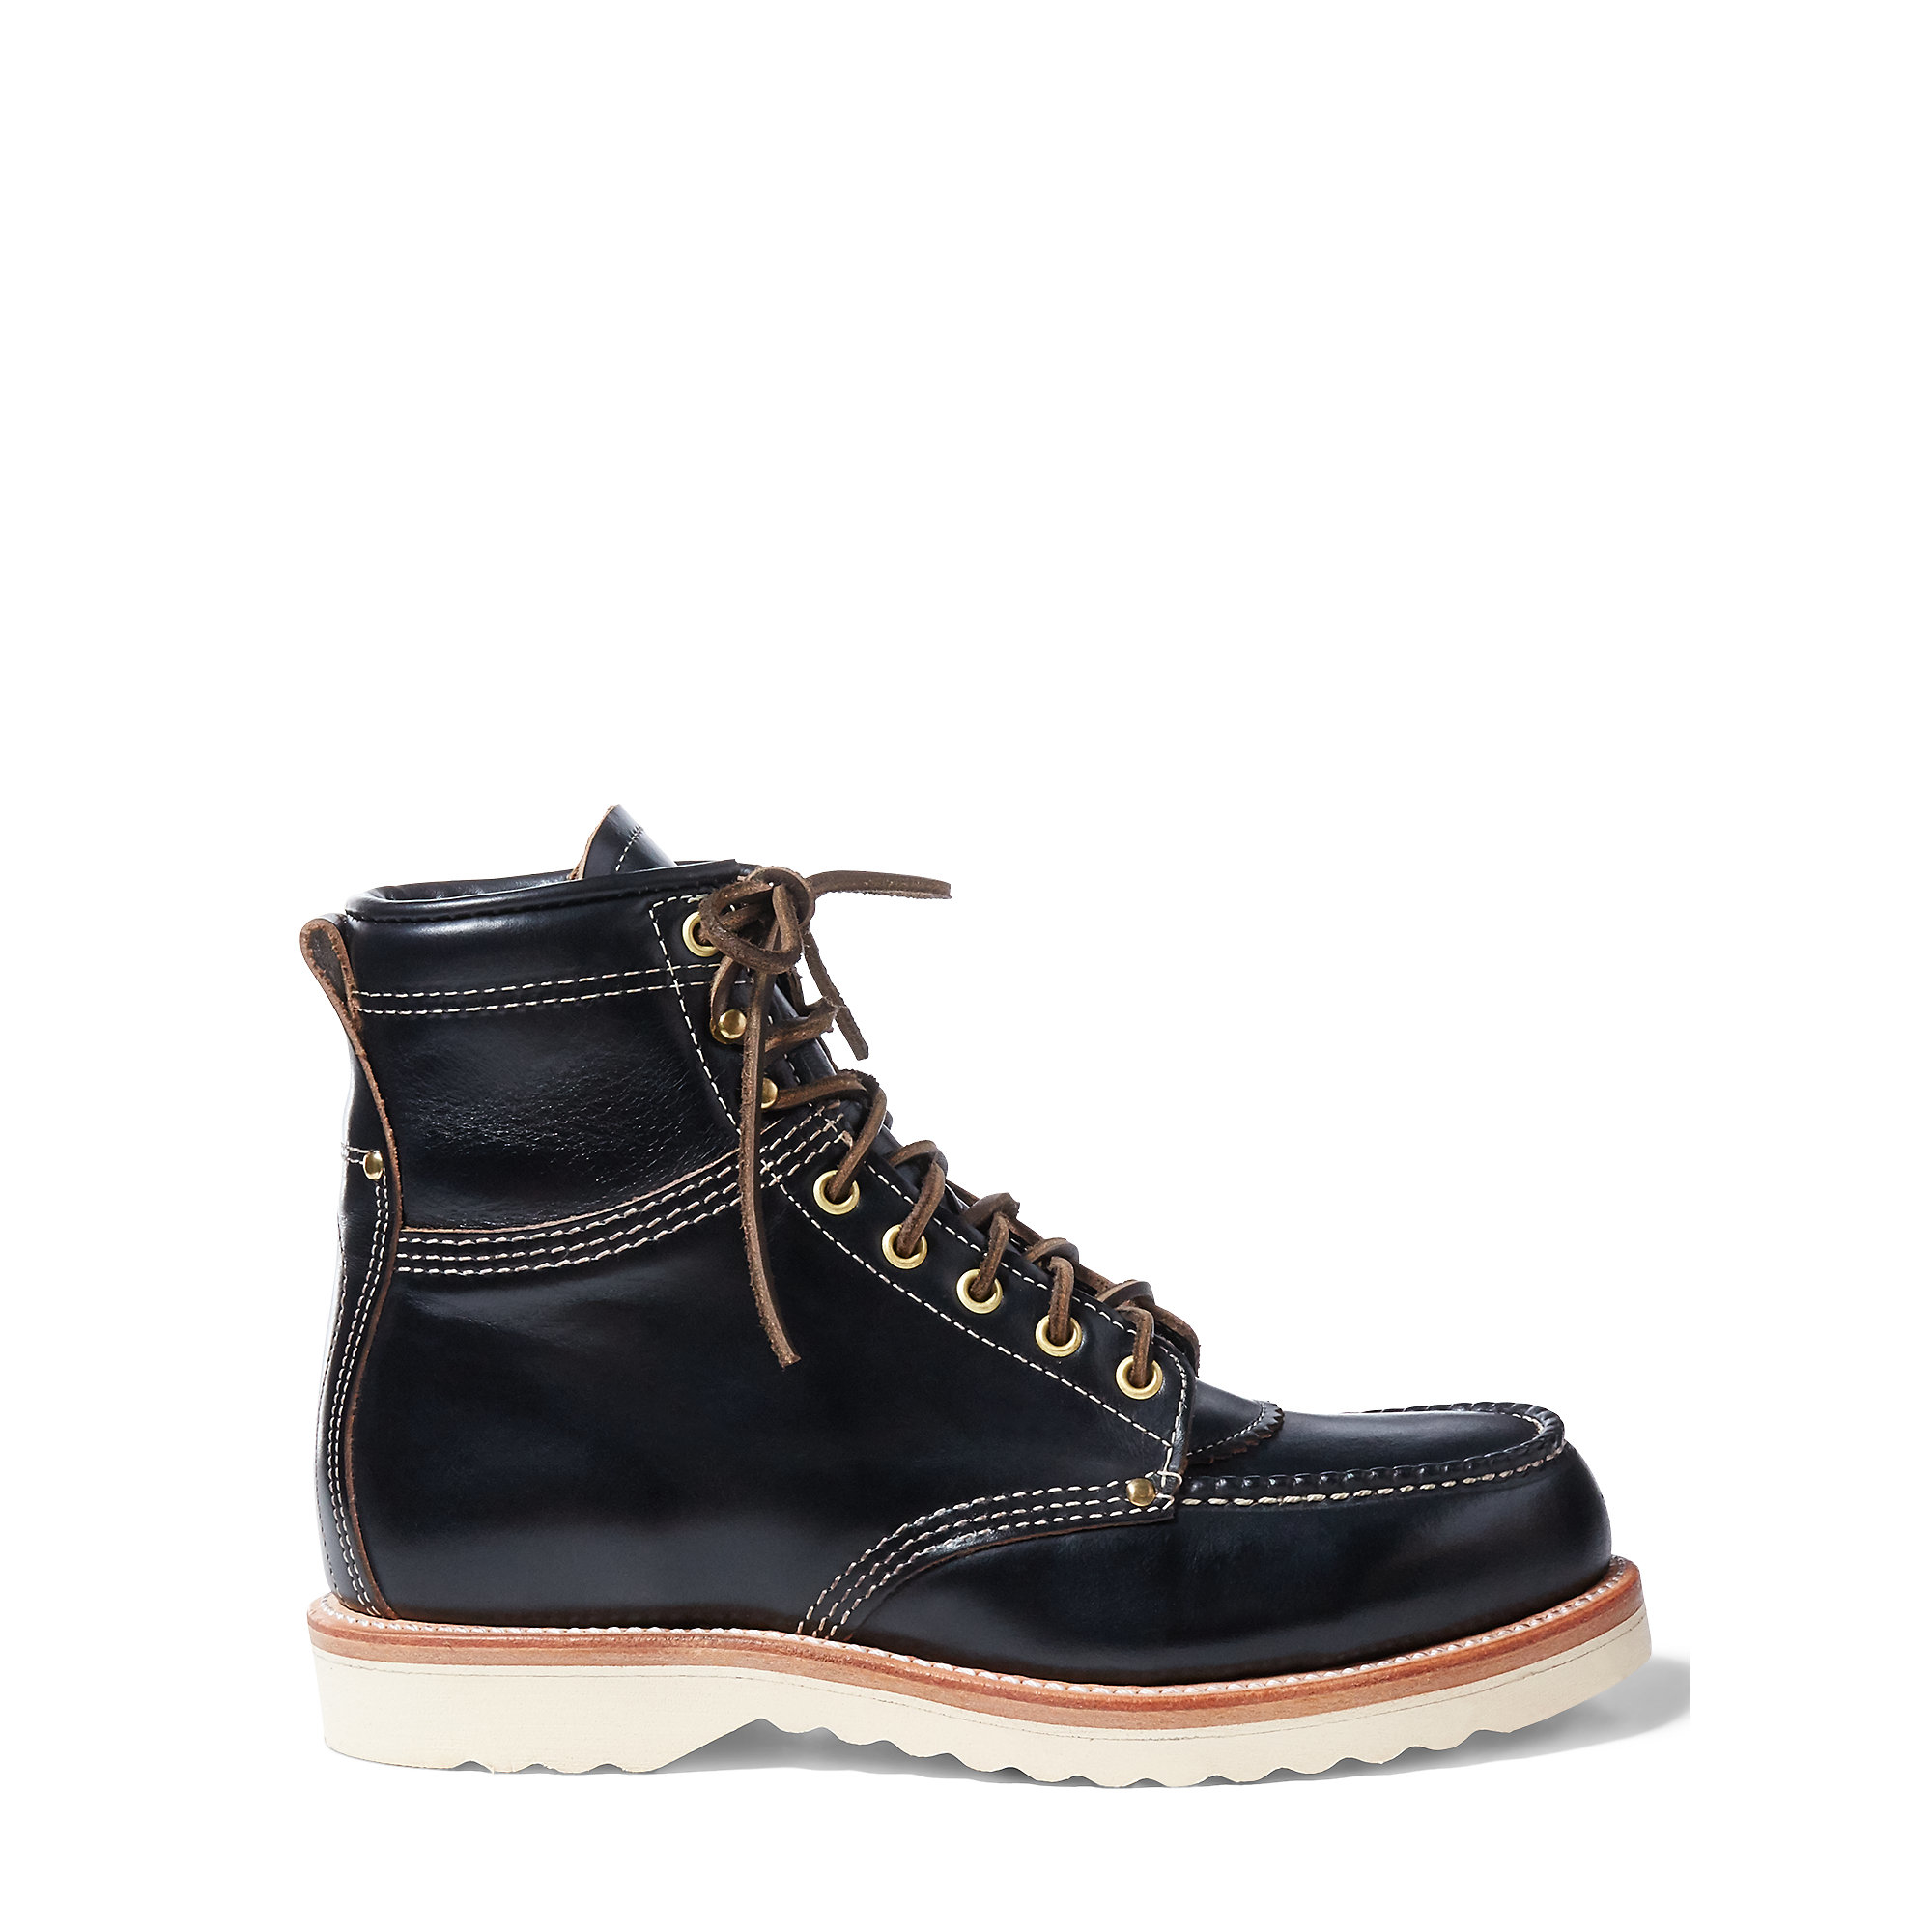 RRL Brunel Leather Work Boot in Black for Men - Lyst